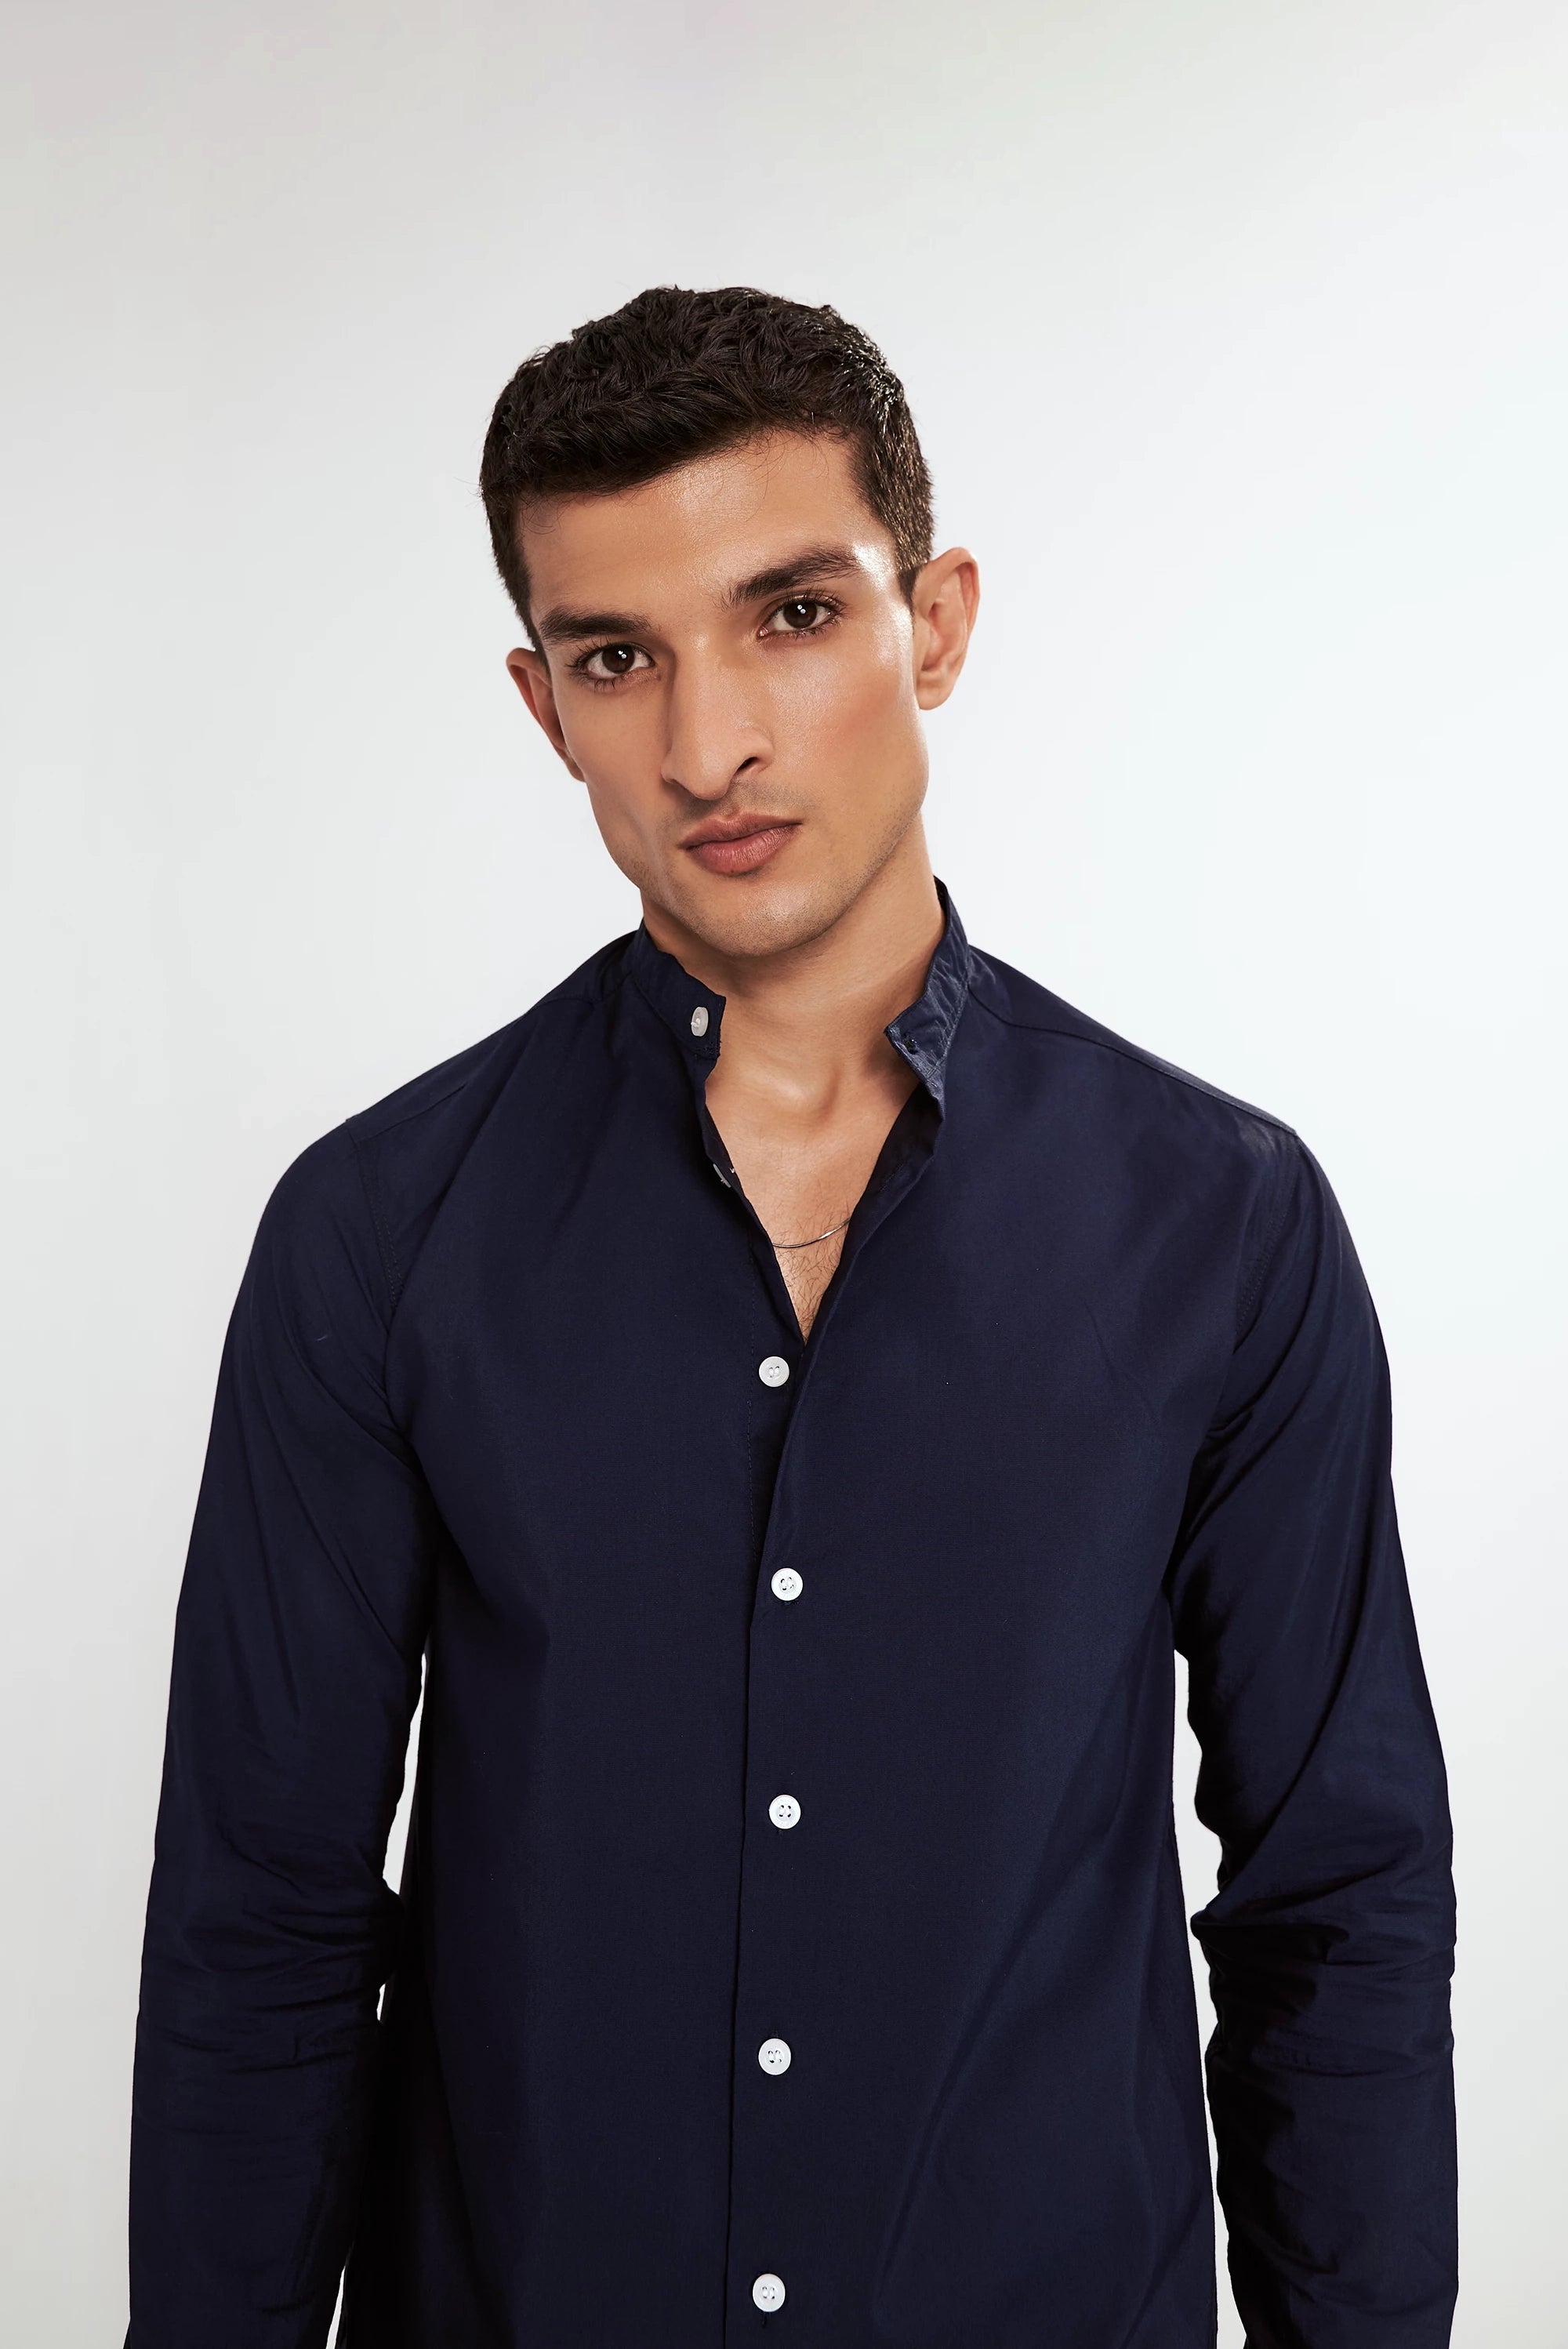 Men's Button-Up Casual Shirt Blue